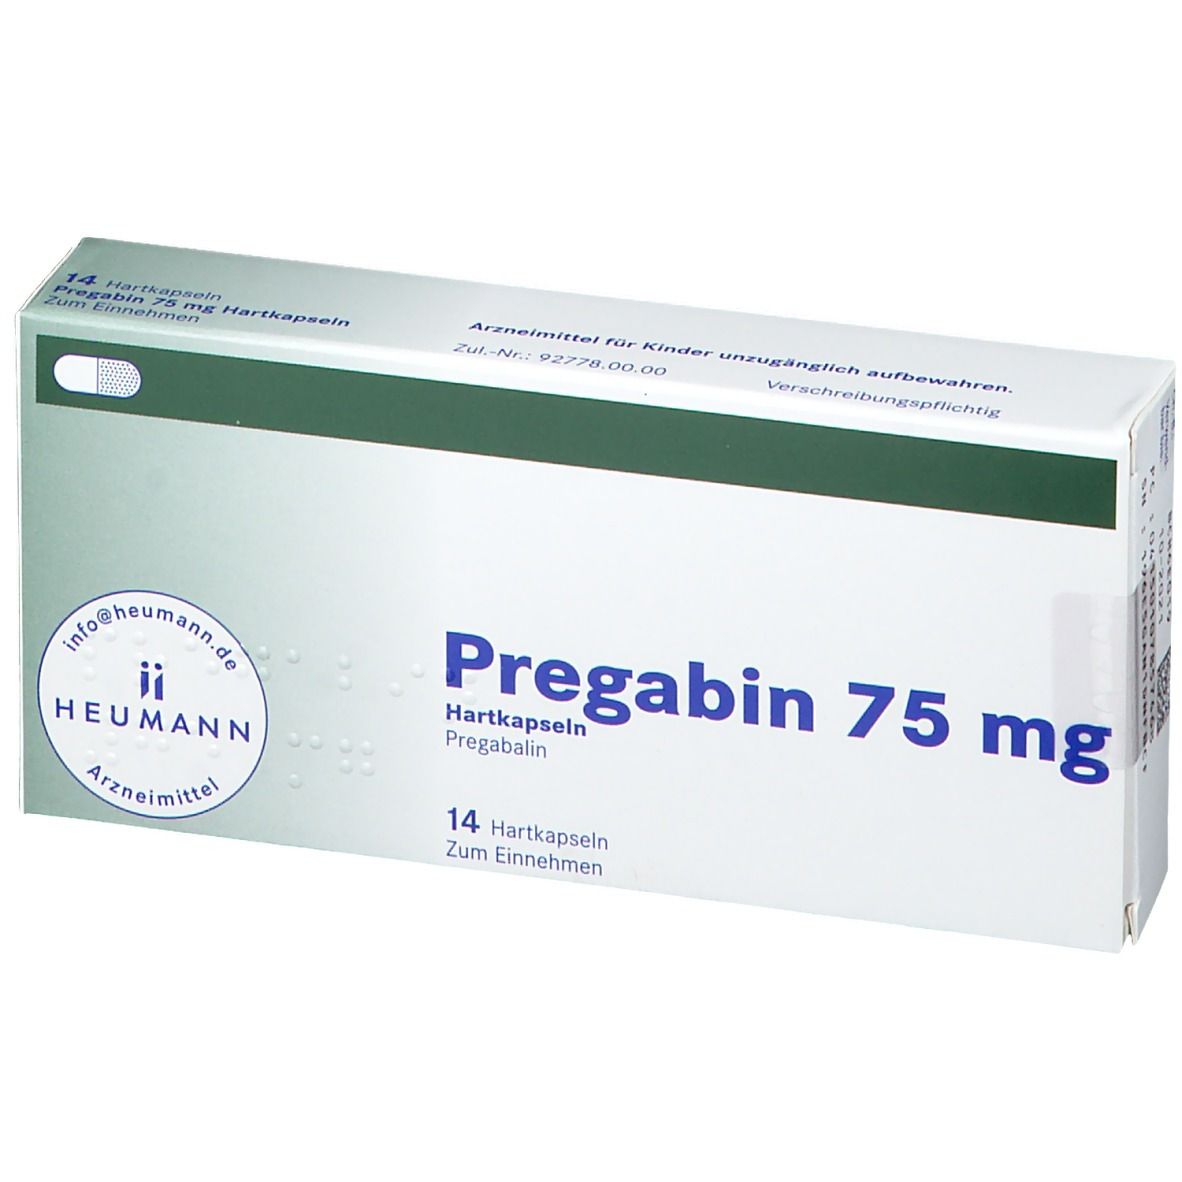 Pregabin 75 mg